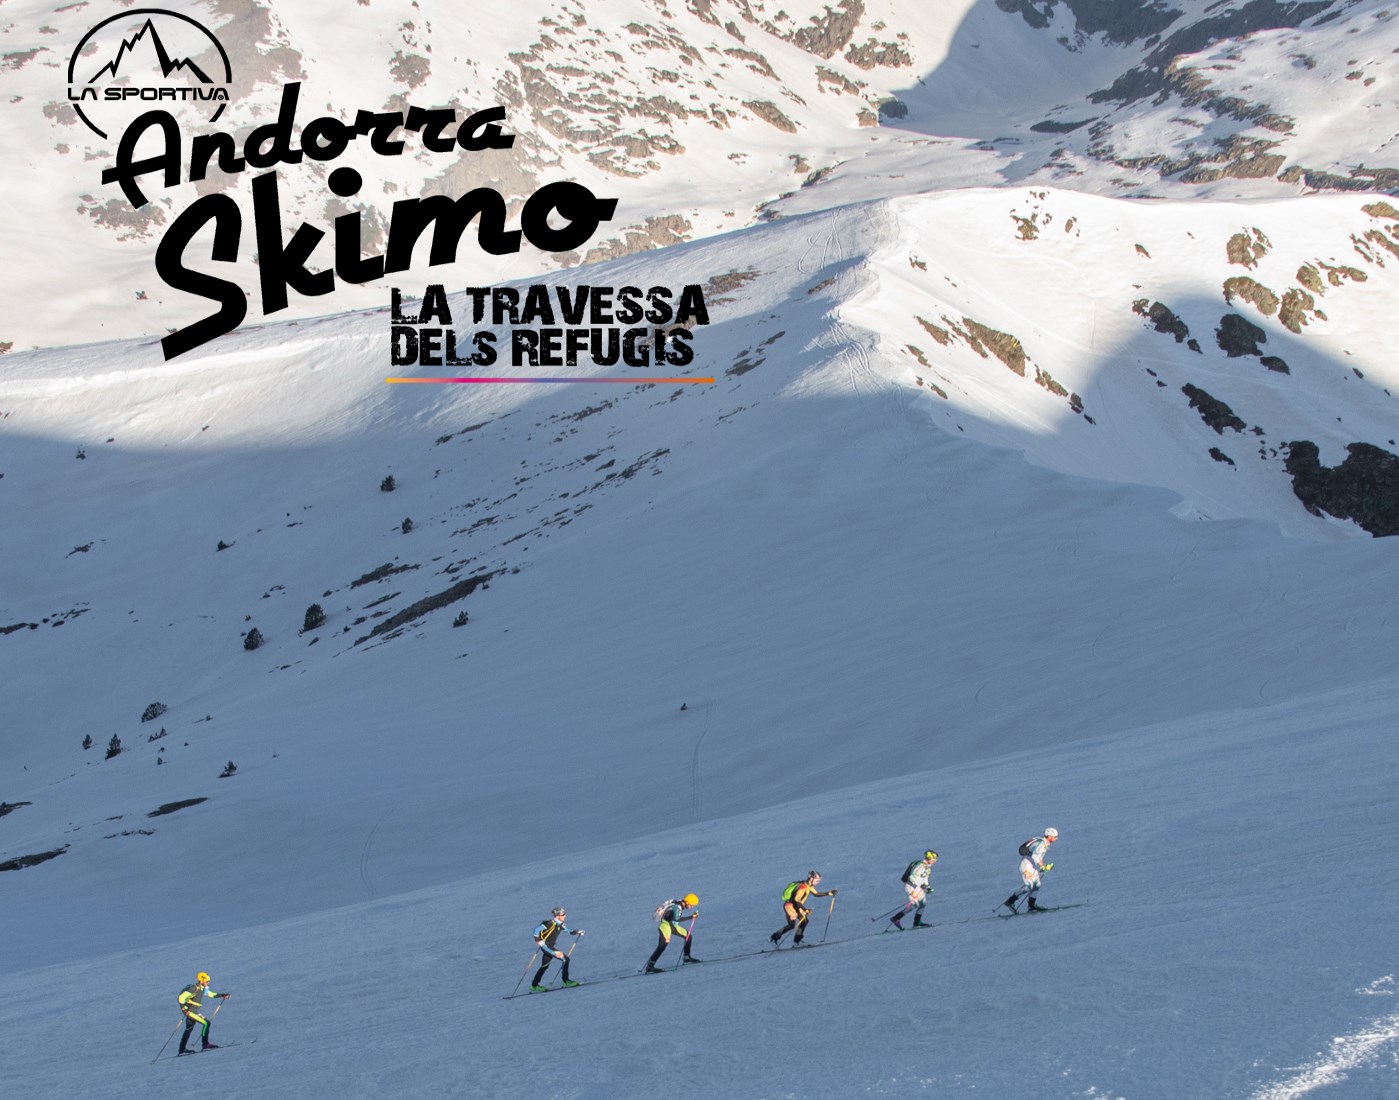 La Sportiva Andorra Skimo 2021 cancelada